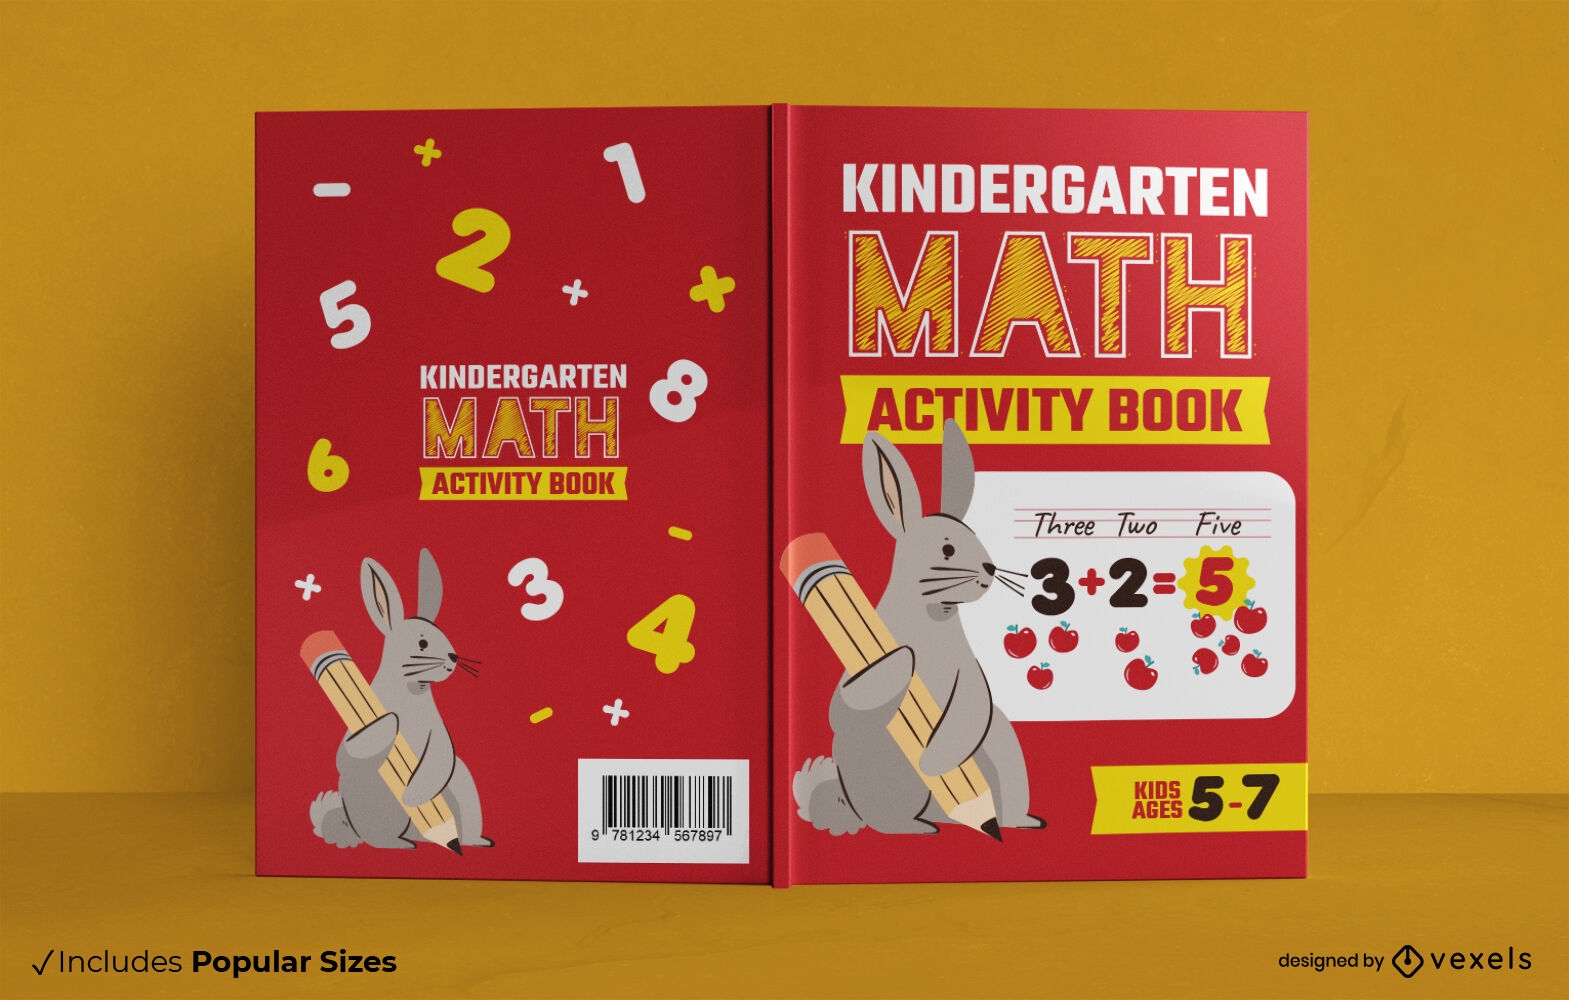 Kindergarten math activity book cover